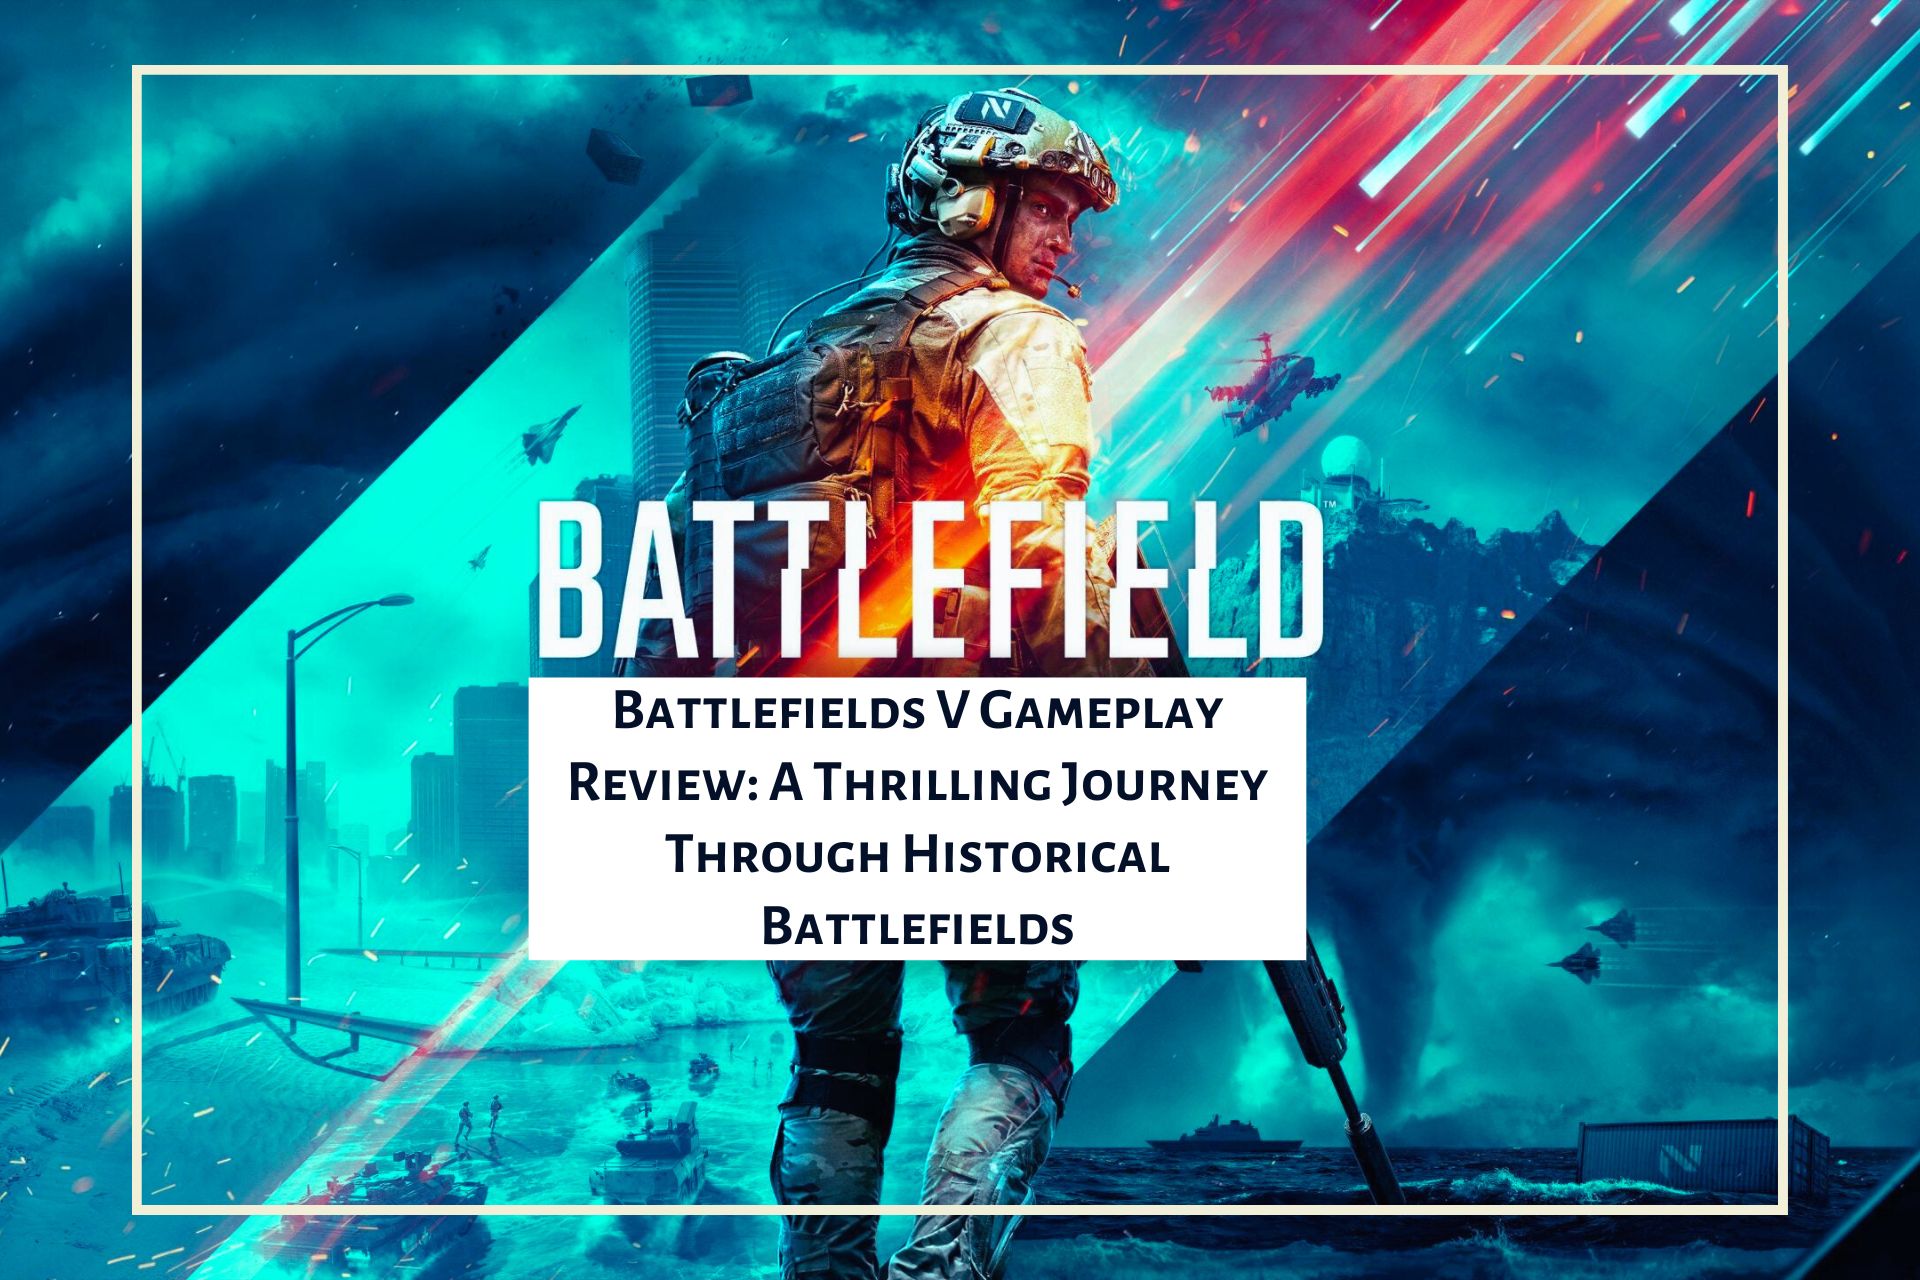 Battlefields V Gameplay Review: A Thrilling Journey Through Historical Battlefields